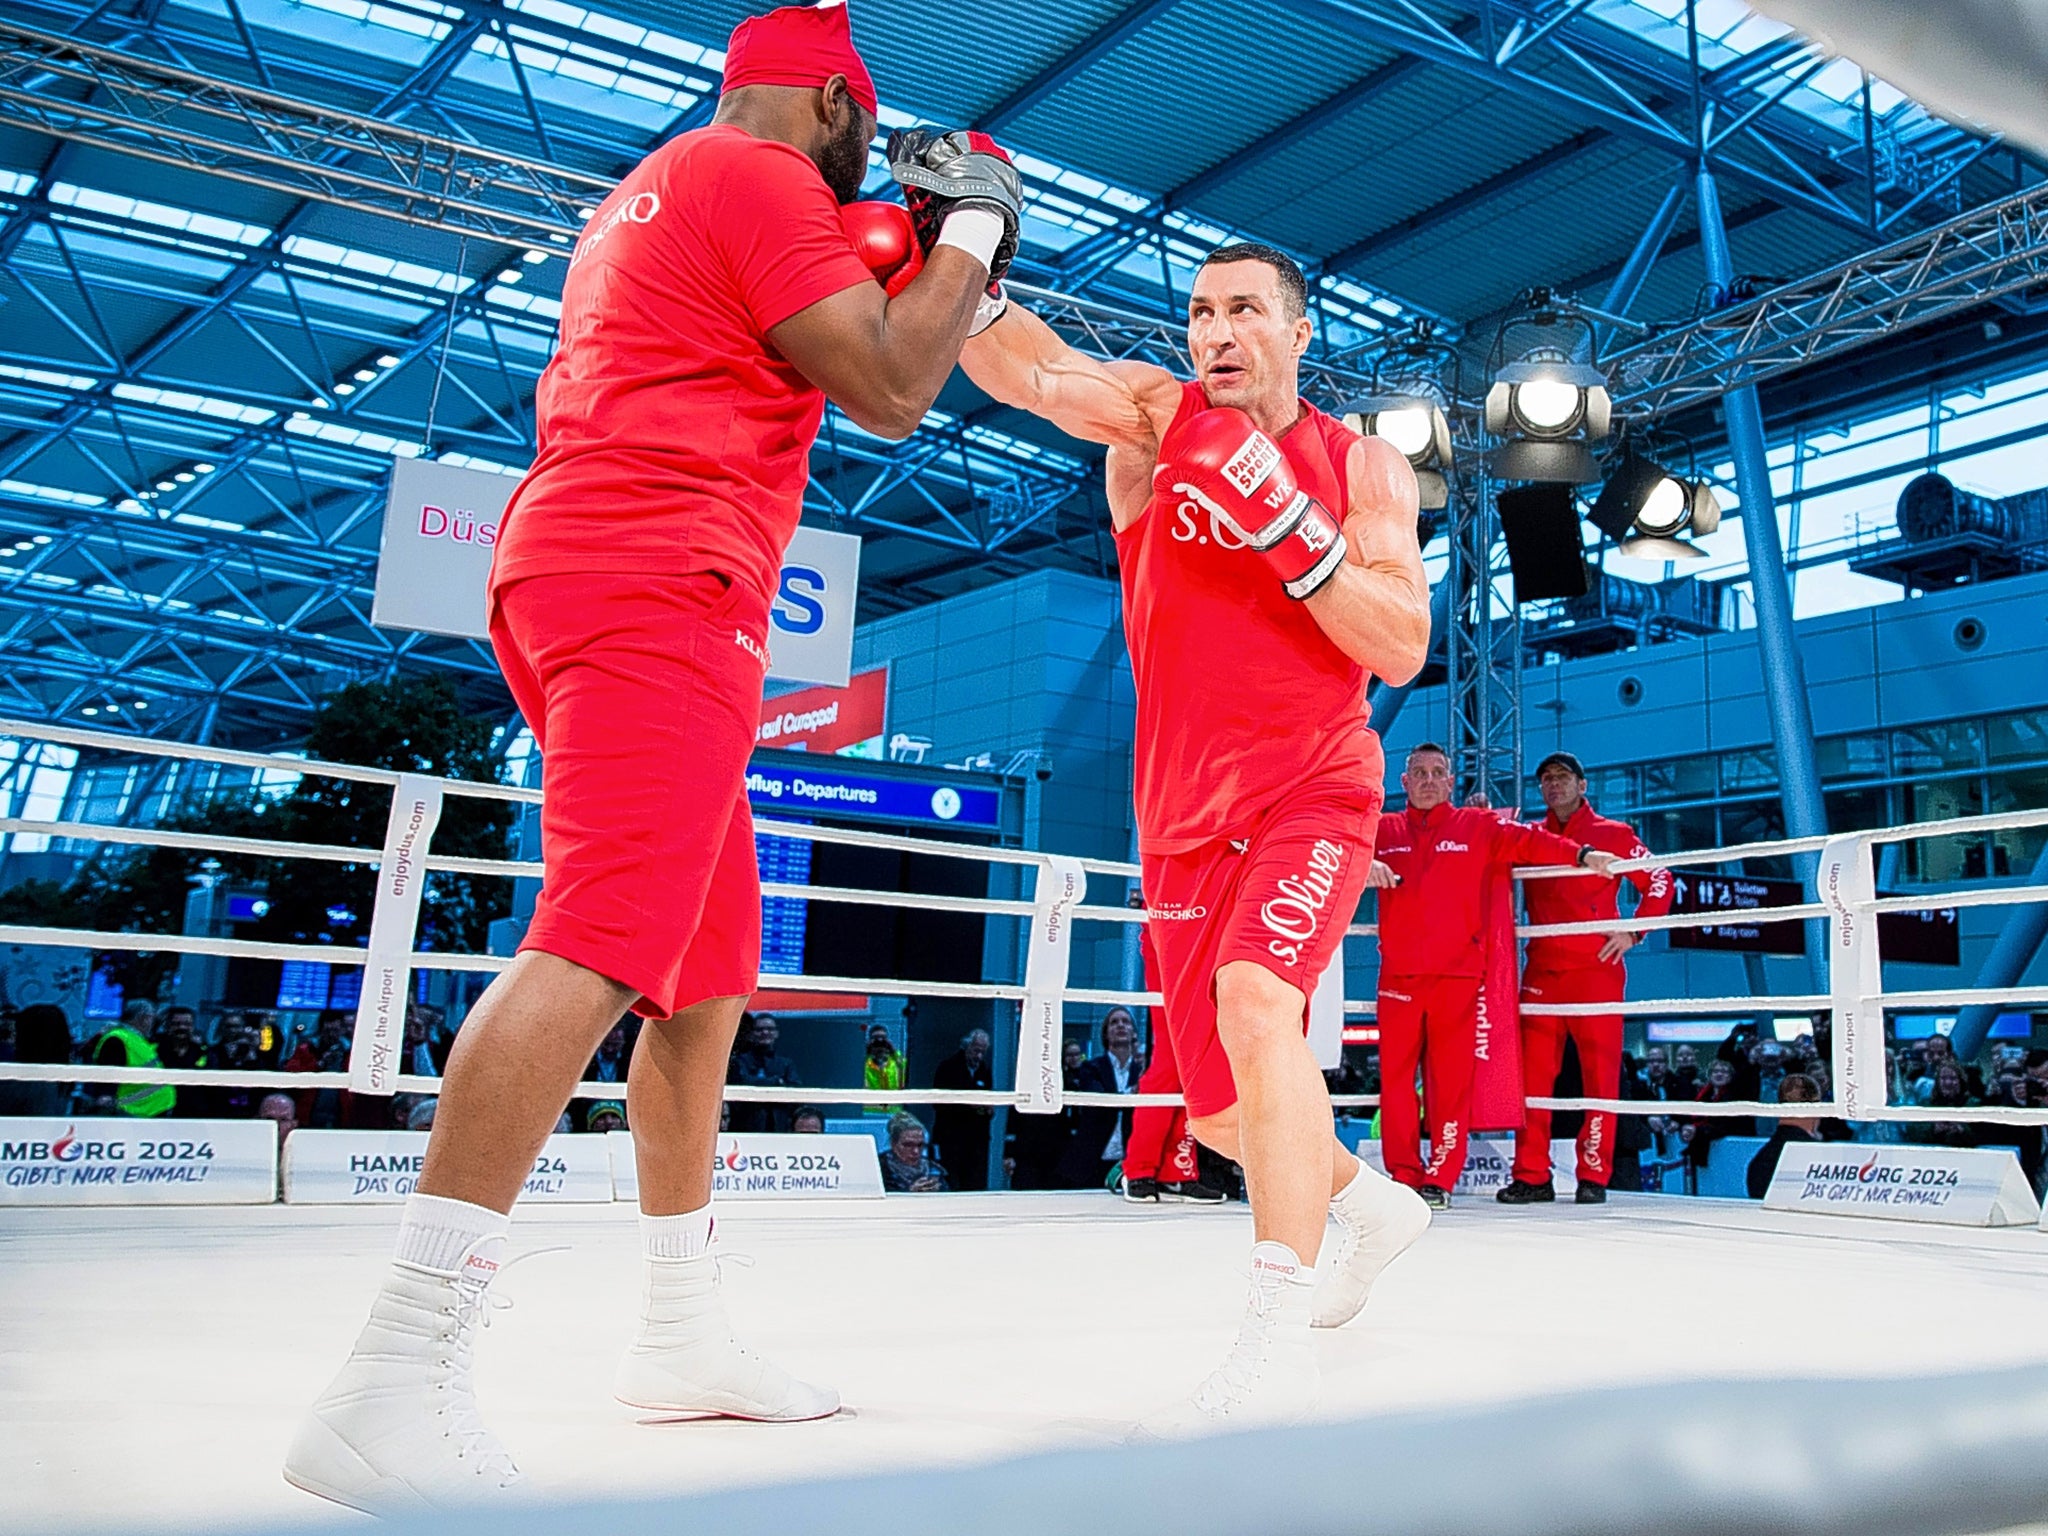 Wladimir Klitschko (right) trains in Düsseldorf ahead of his world title fight with Tyson Fury